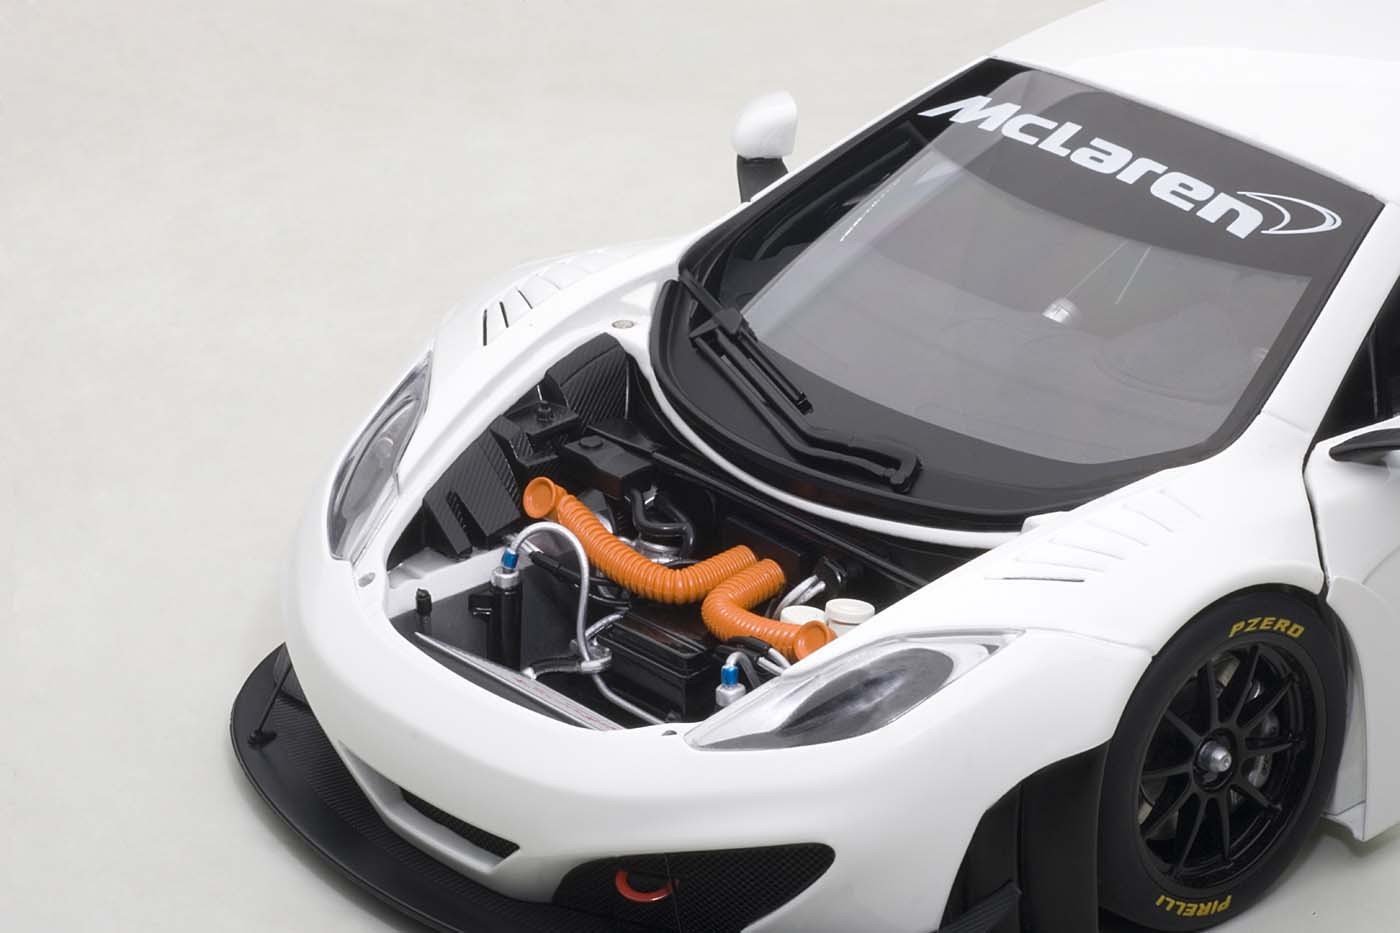 Sale! McLaren 12C GT3 (Motorsport Version) 2012 AUTOart 81341 Scale 1:18